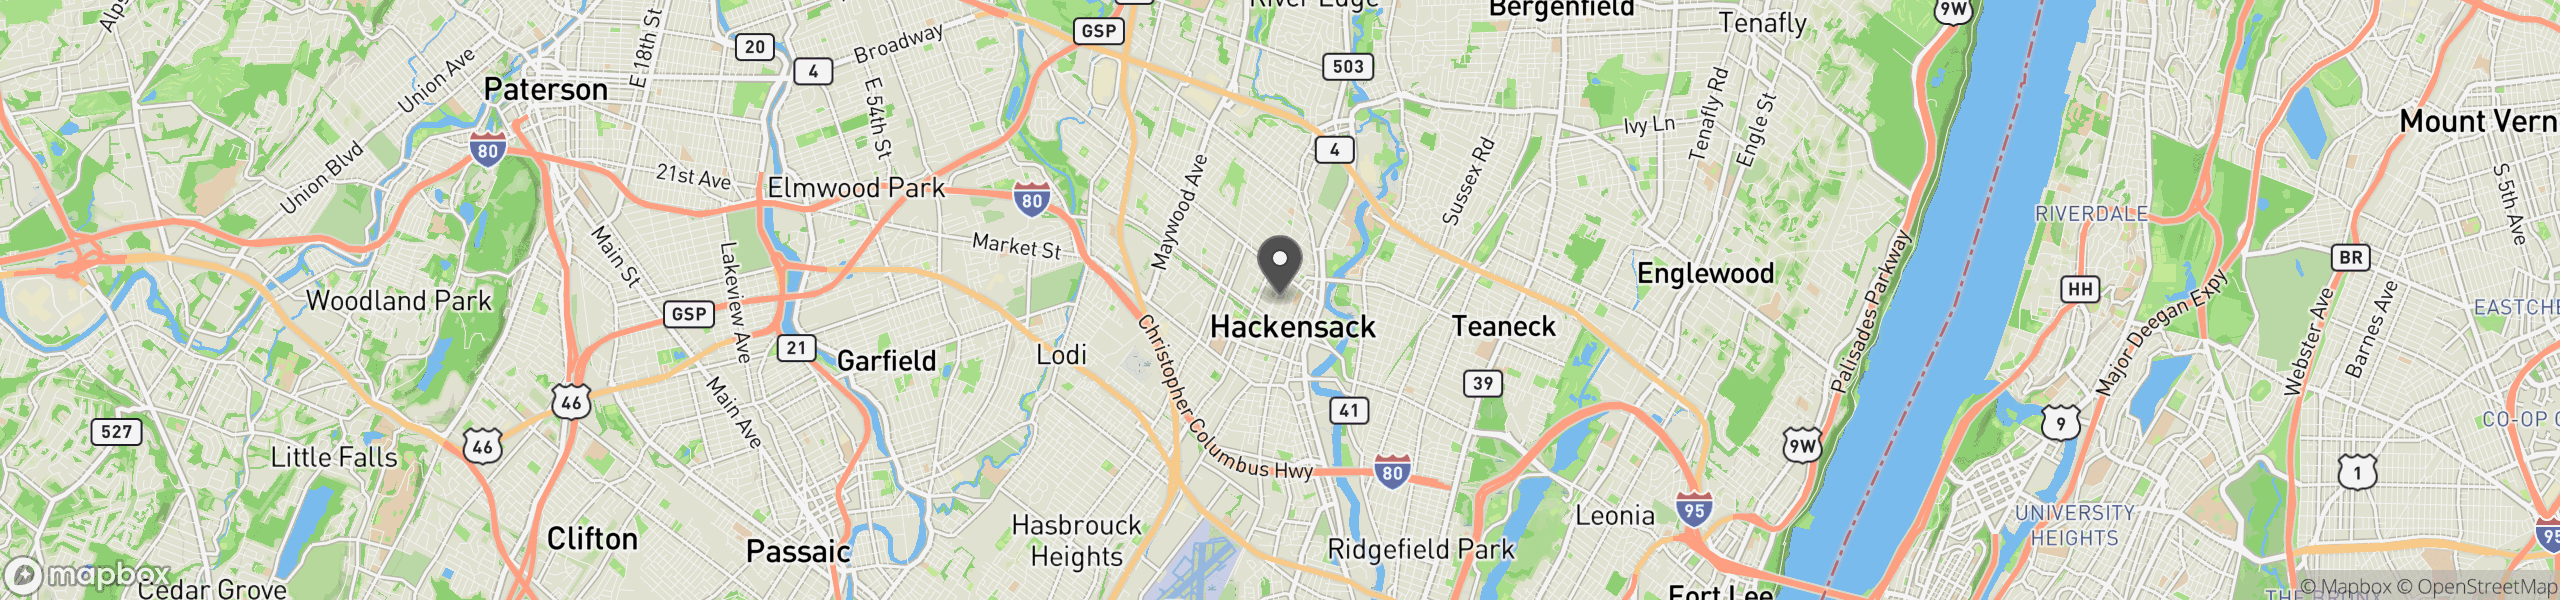 Hackensack, NJ 07601